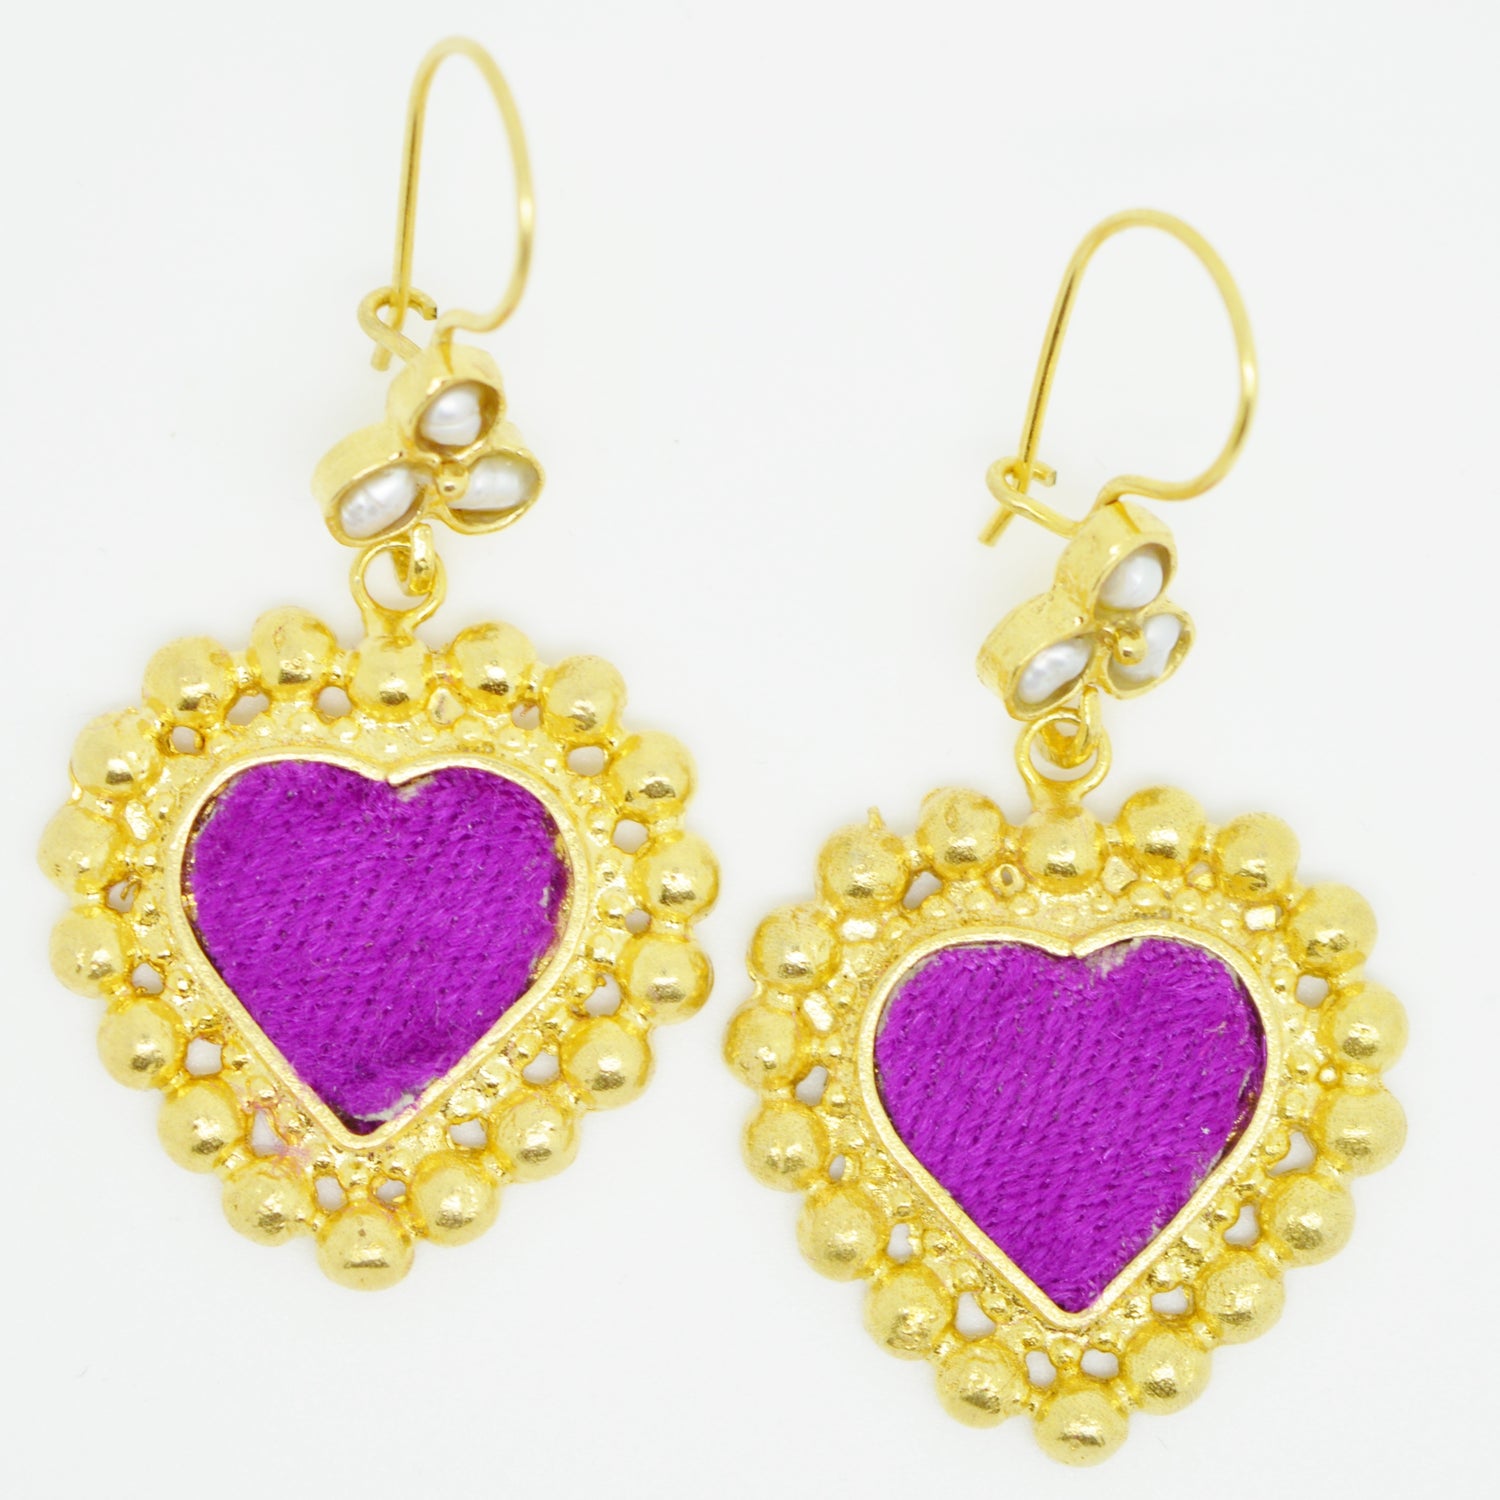 Aylas Pearl & Velvet earrings - Gold plated semi precious gemstone - Handmade in Ottoman Style